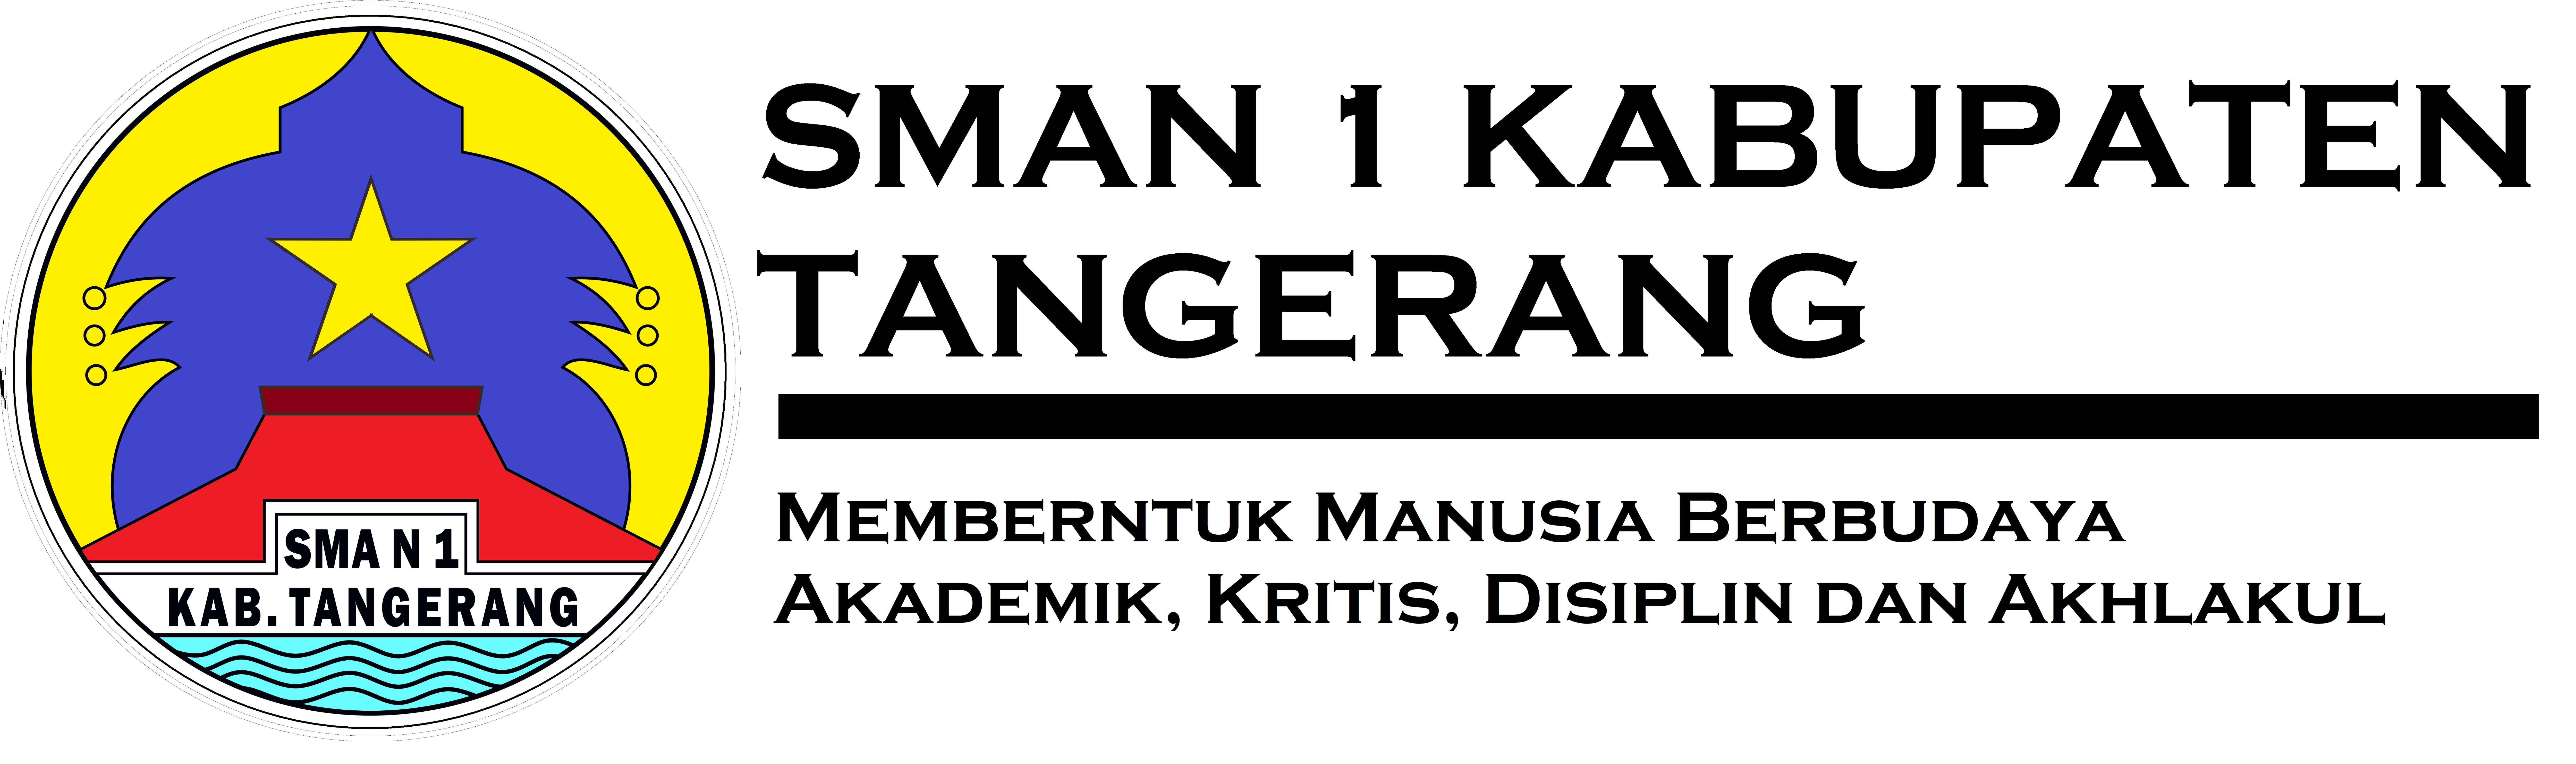 SMAN 1 Kab Tangerang